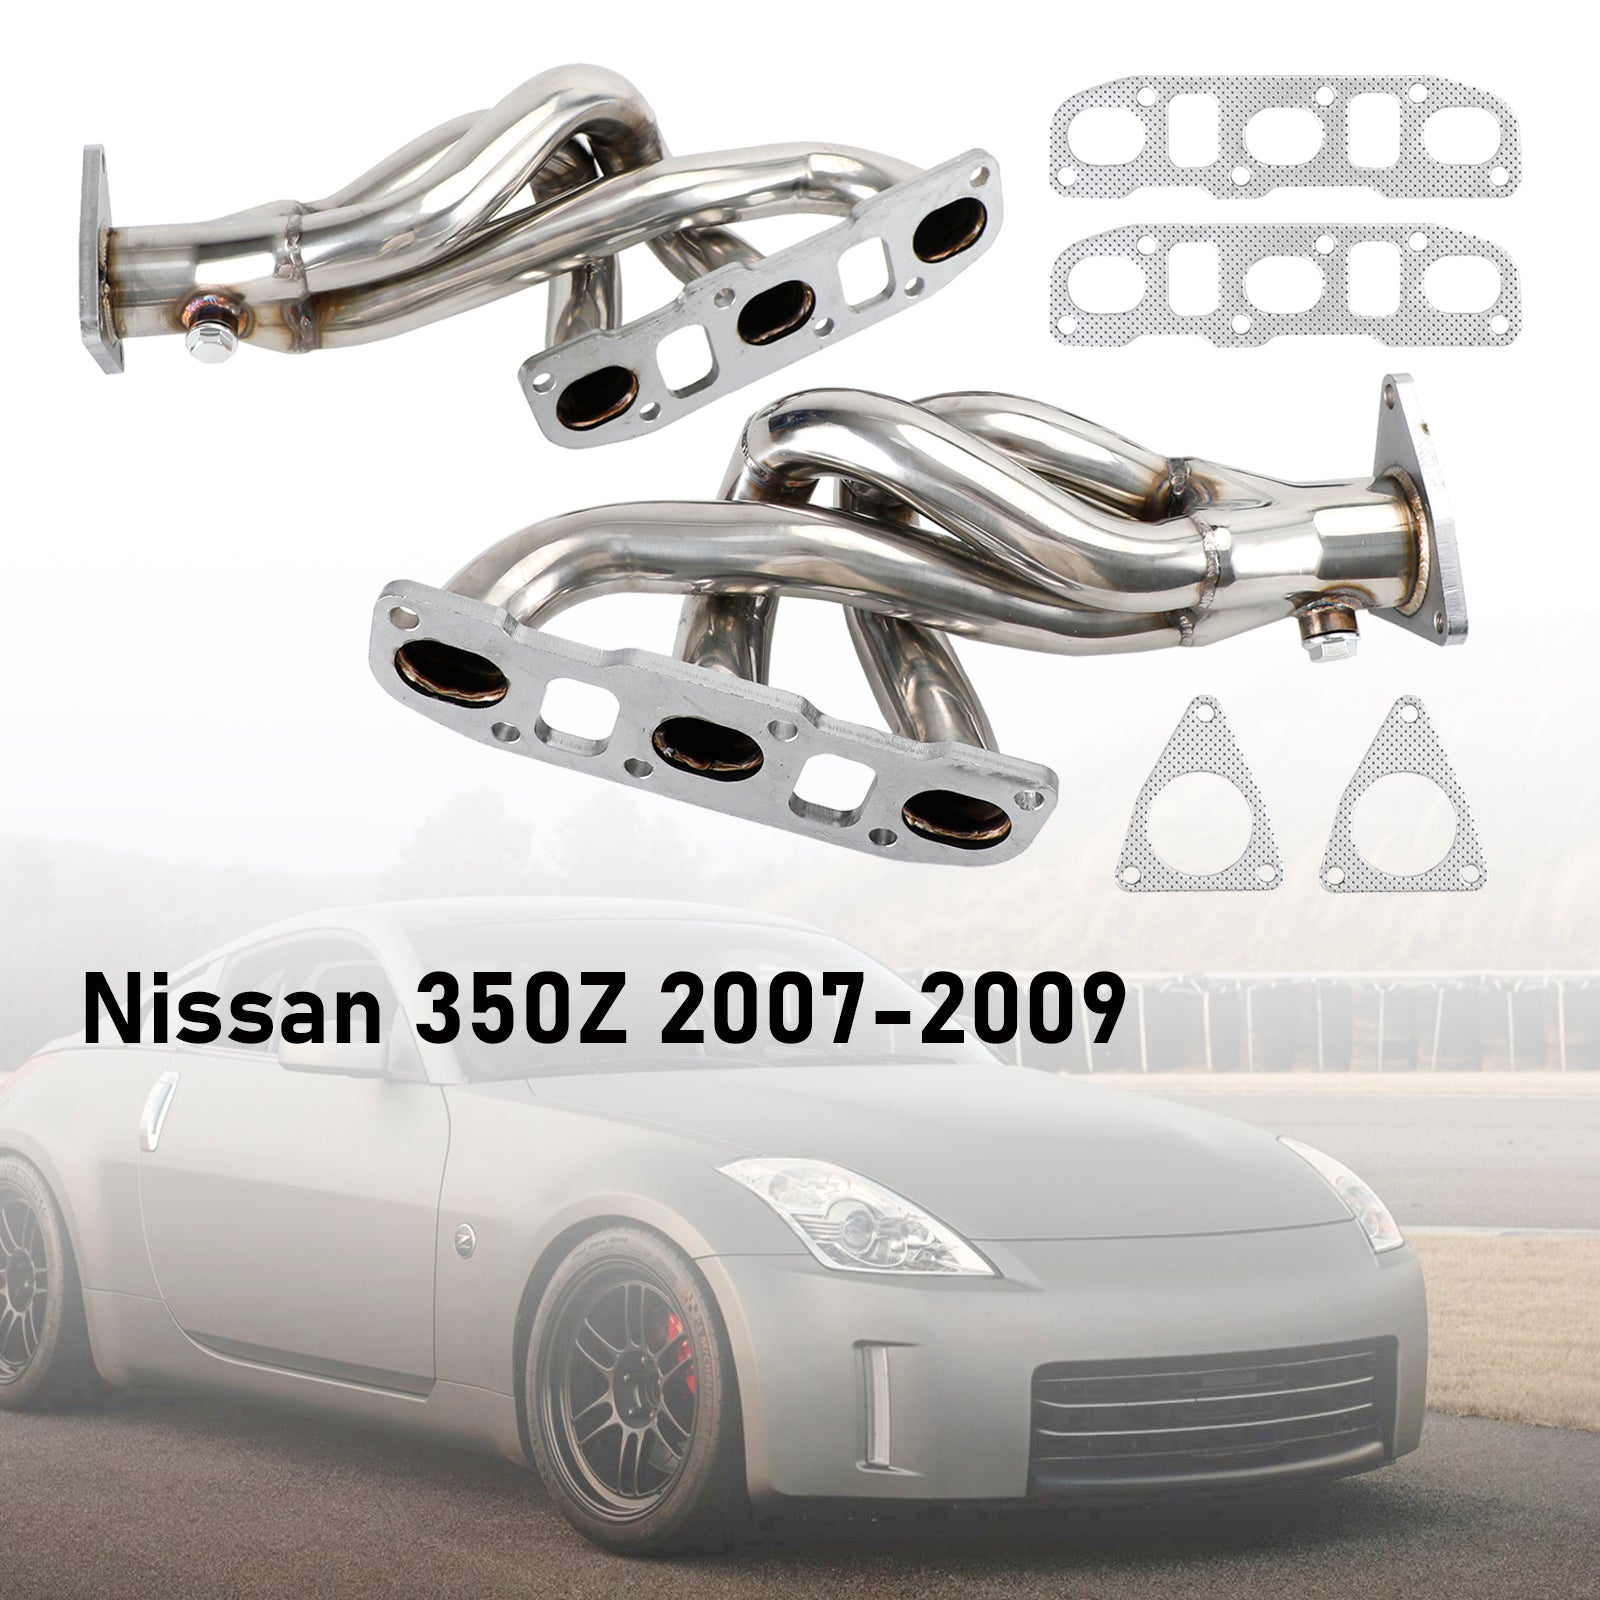 Nissan 350Z 370Z Infiniti G37 Stainless Steel Exhaust Header Manifold